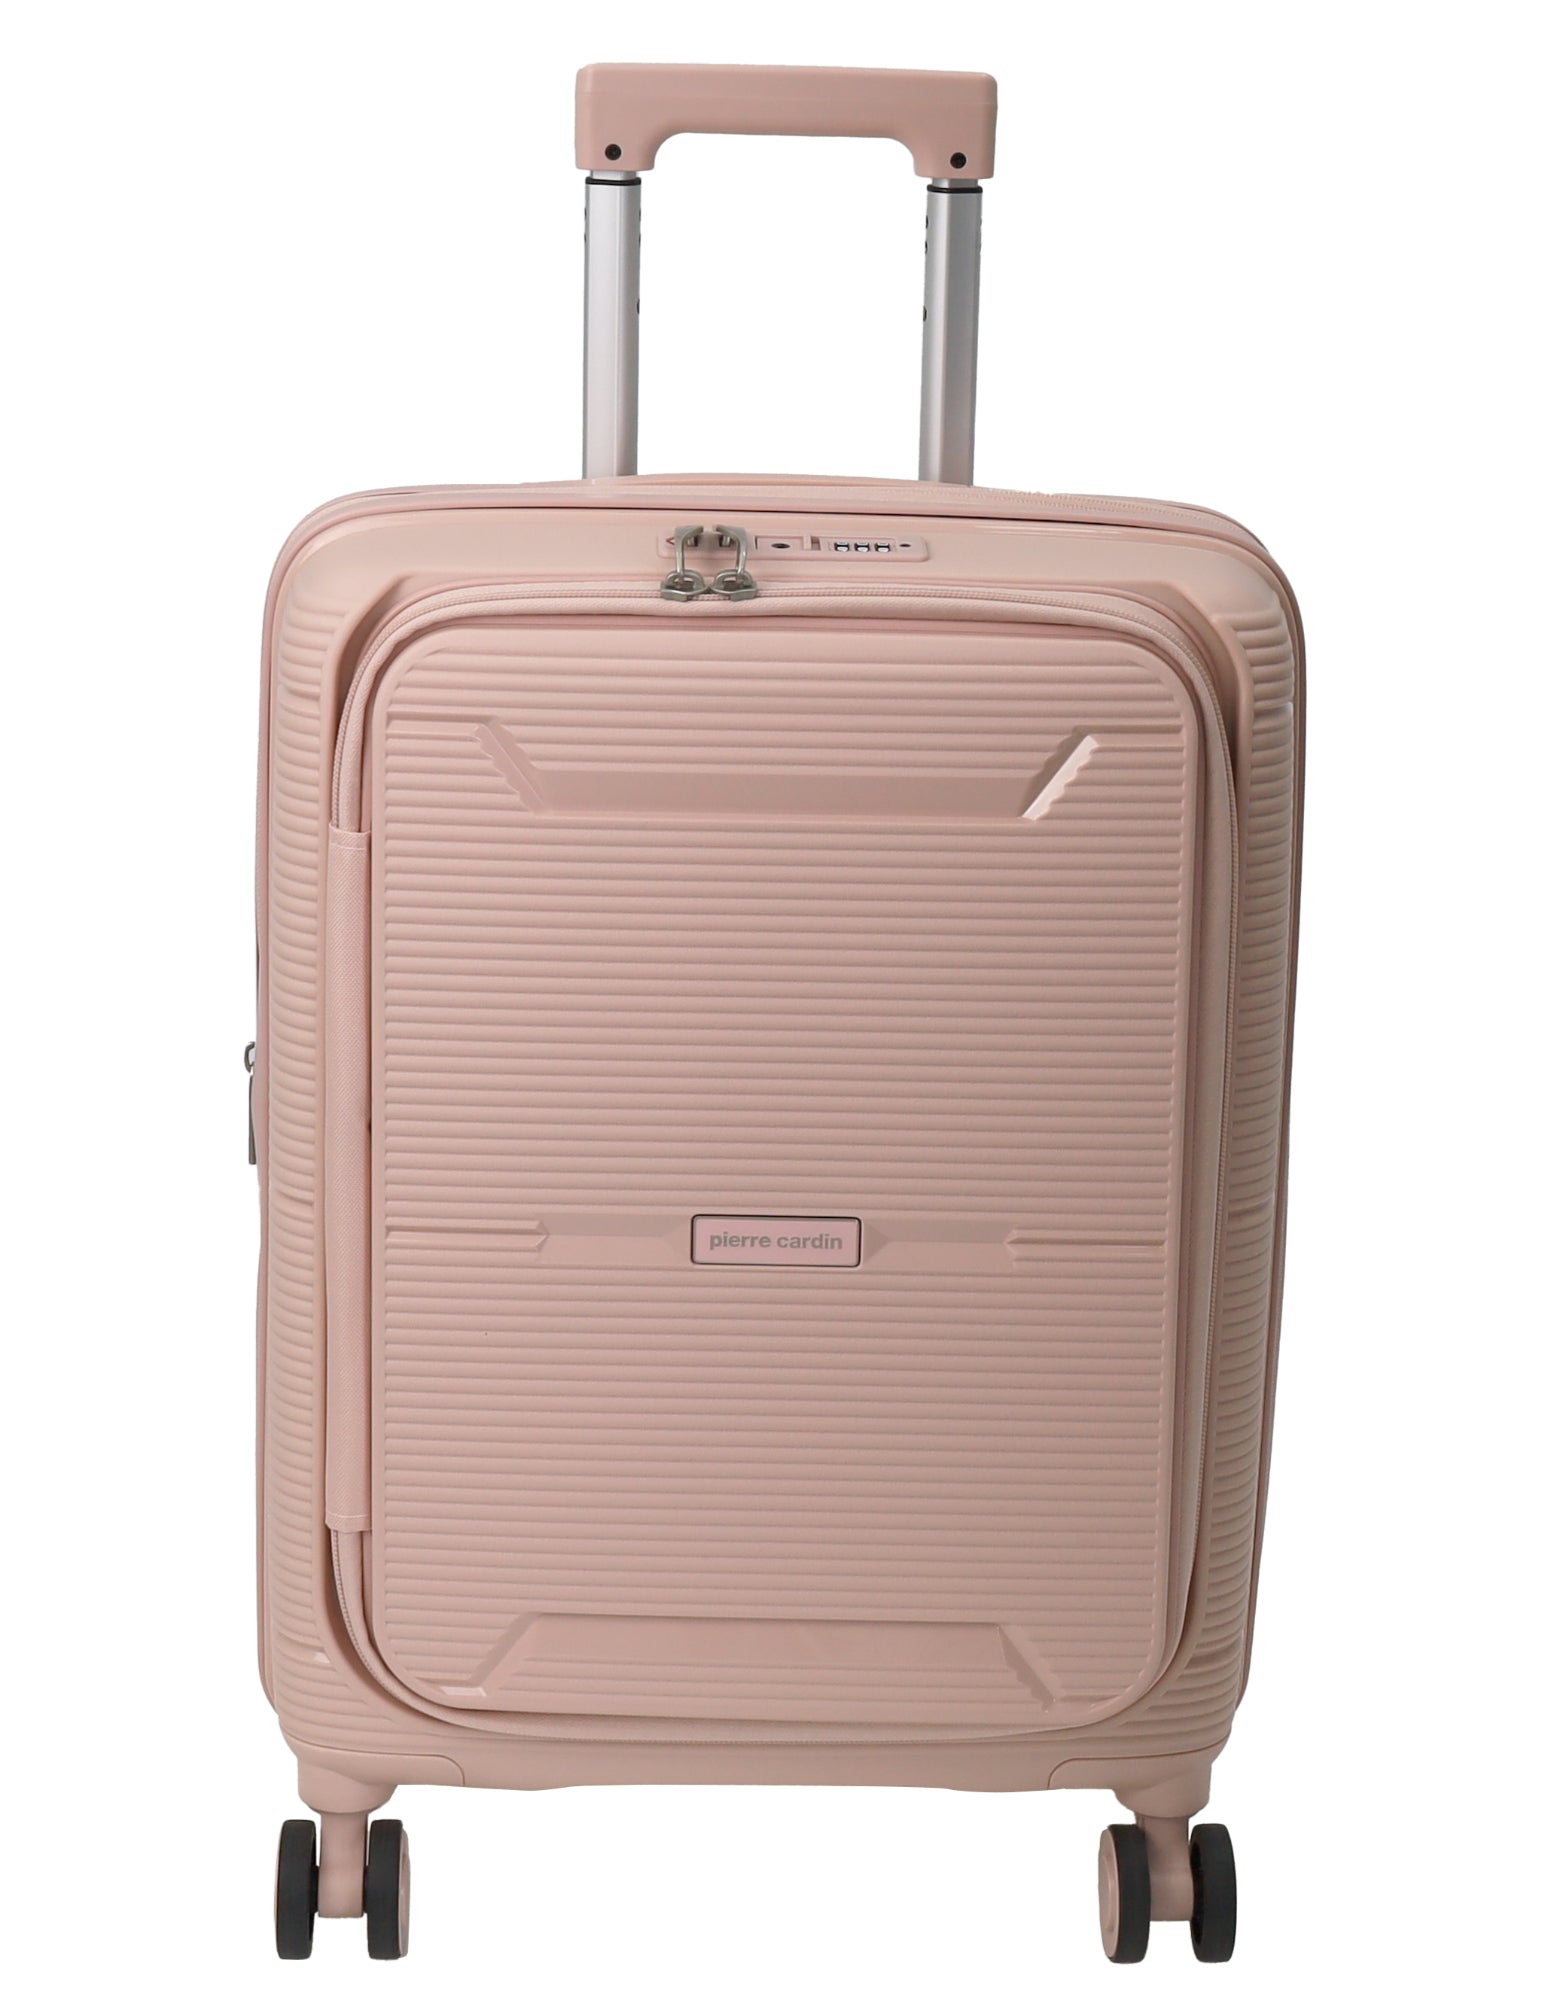 Pierre Cardin 54cm CABIN Hard Shell Suitcase in Blush